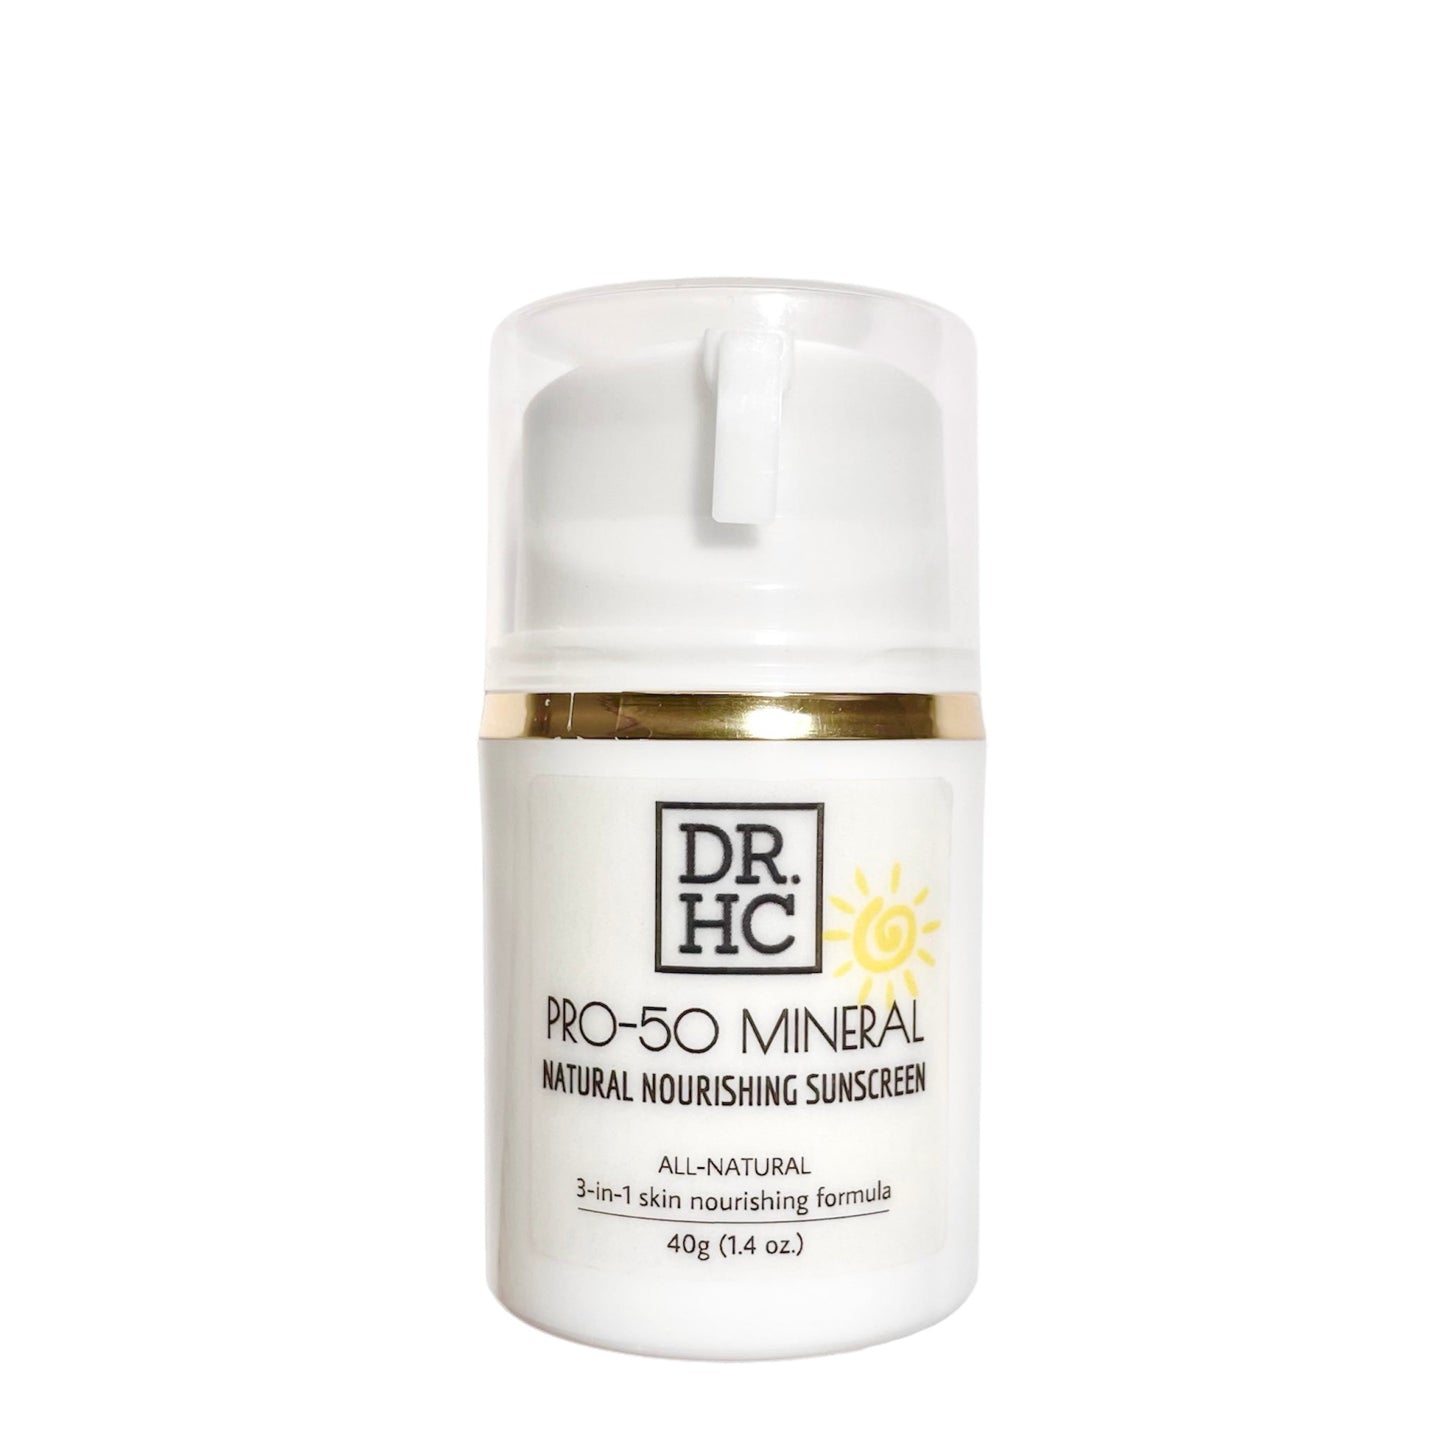 DR.HC Pro-50 Mineral Natural Nourishing Sunscreen (40g, 1.4oz.) (Natural UV Care, Skin brightening, Anti-aging, Damage Repair, Anti-inflammatory...)-11